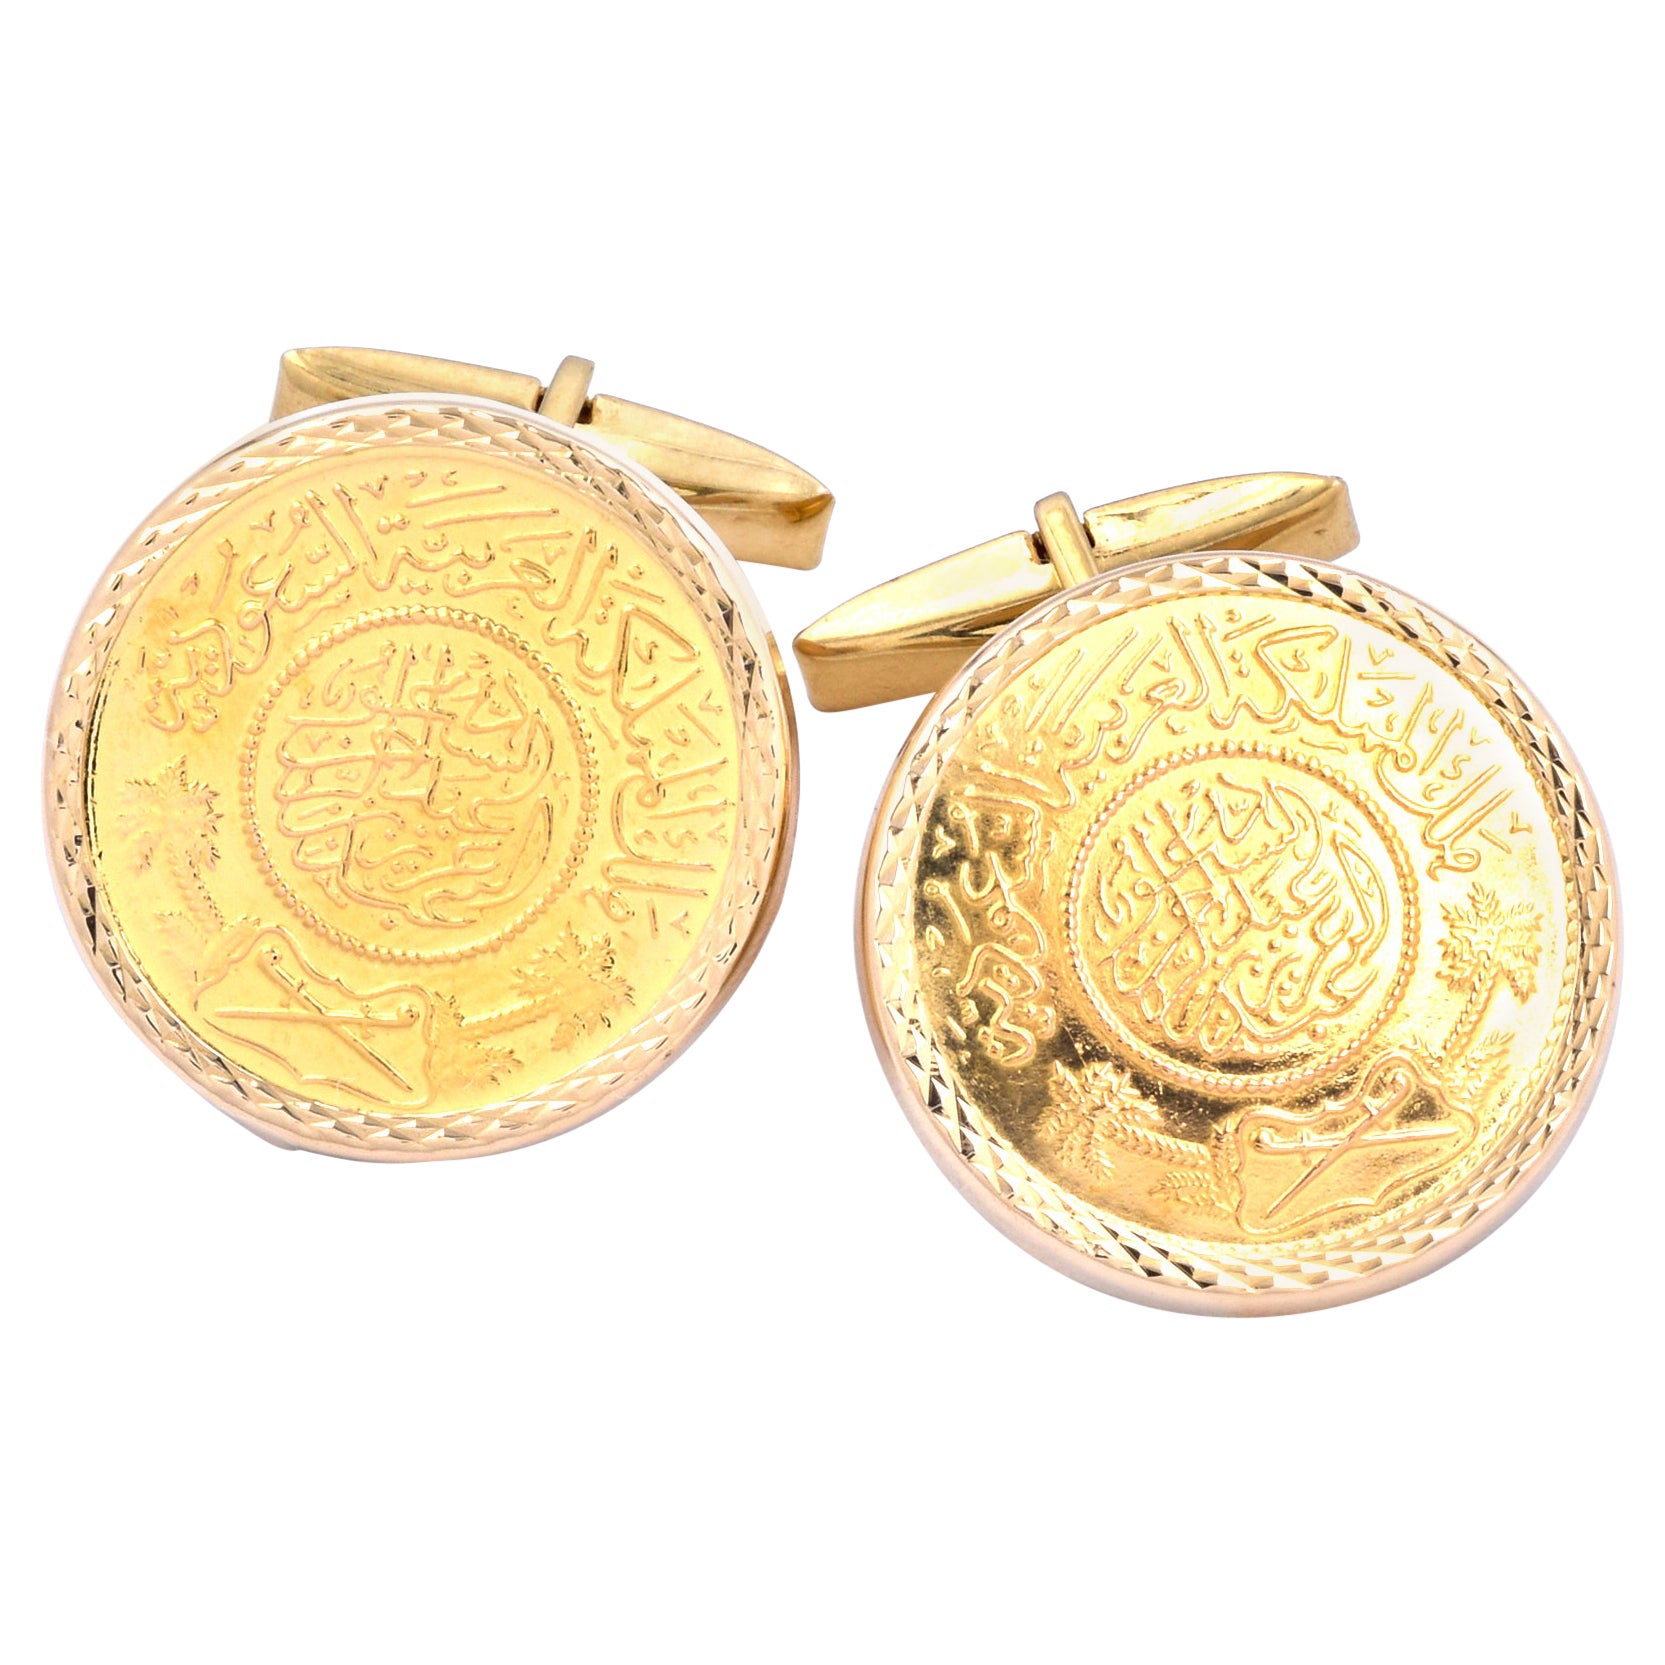 18 Karat Yellow Gold Cufflinks with Arabic Coins